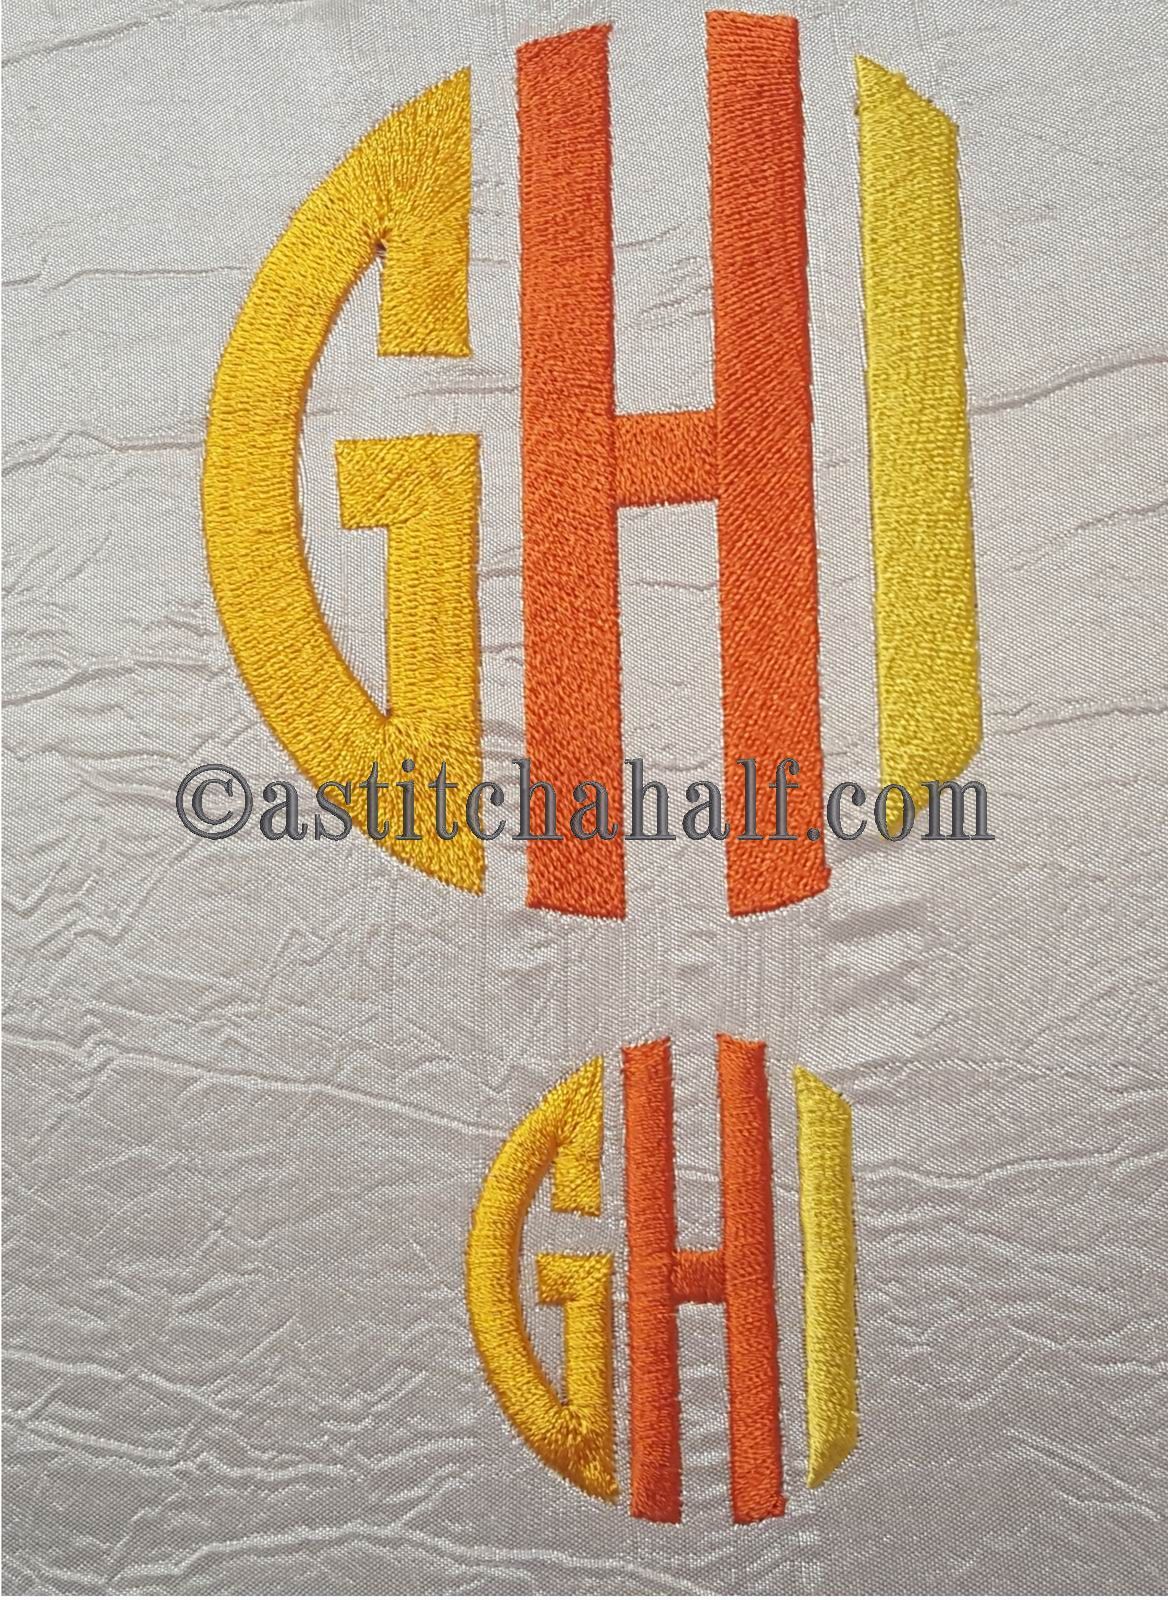 Circle Monogram Letters GHI - aStitch aHalf